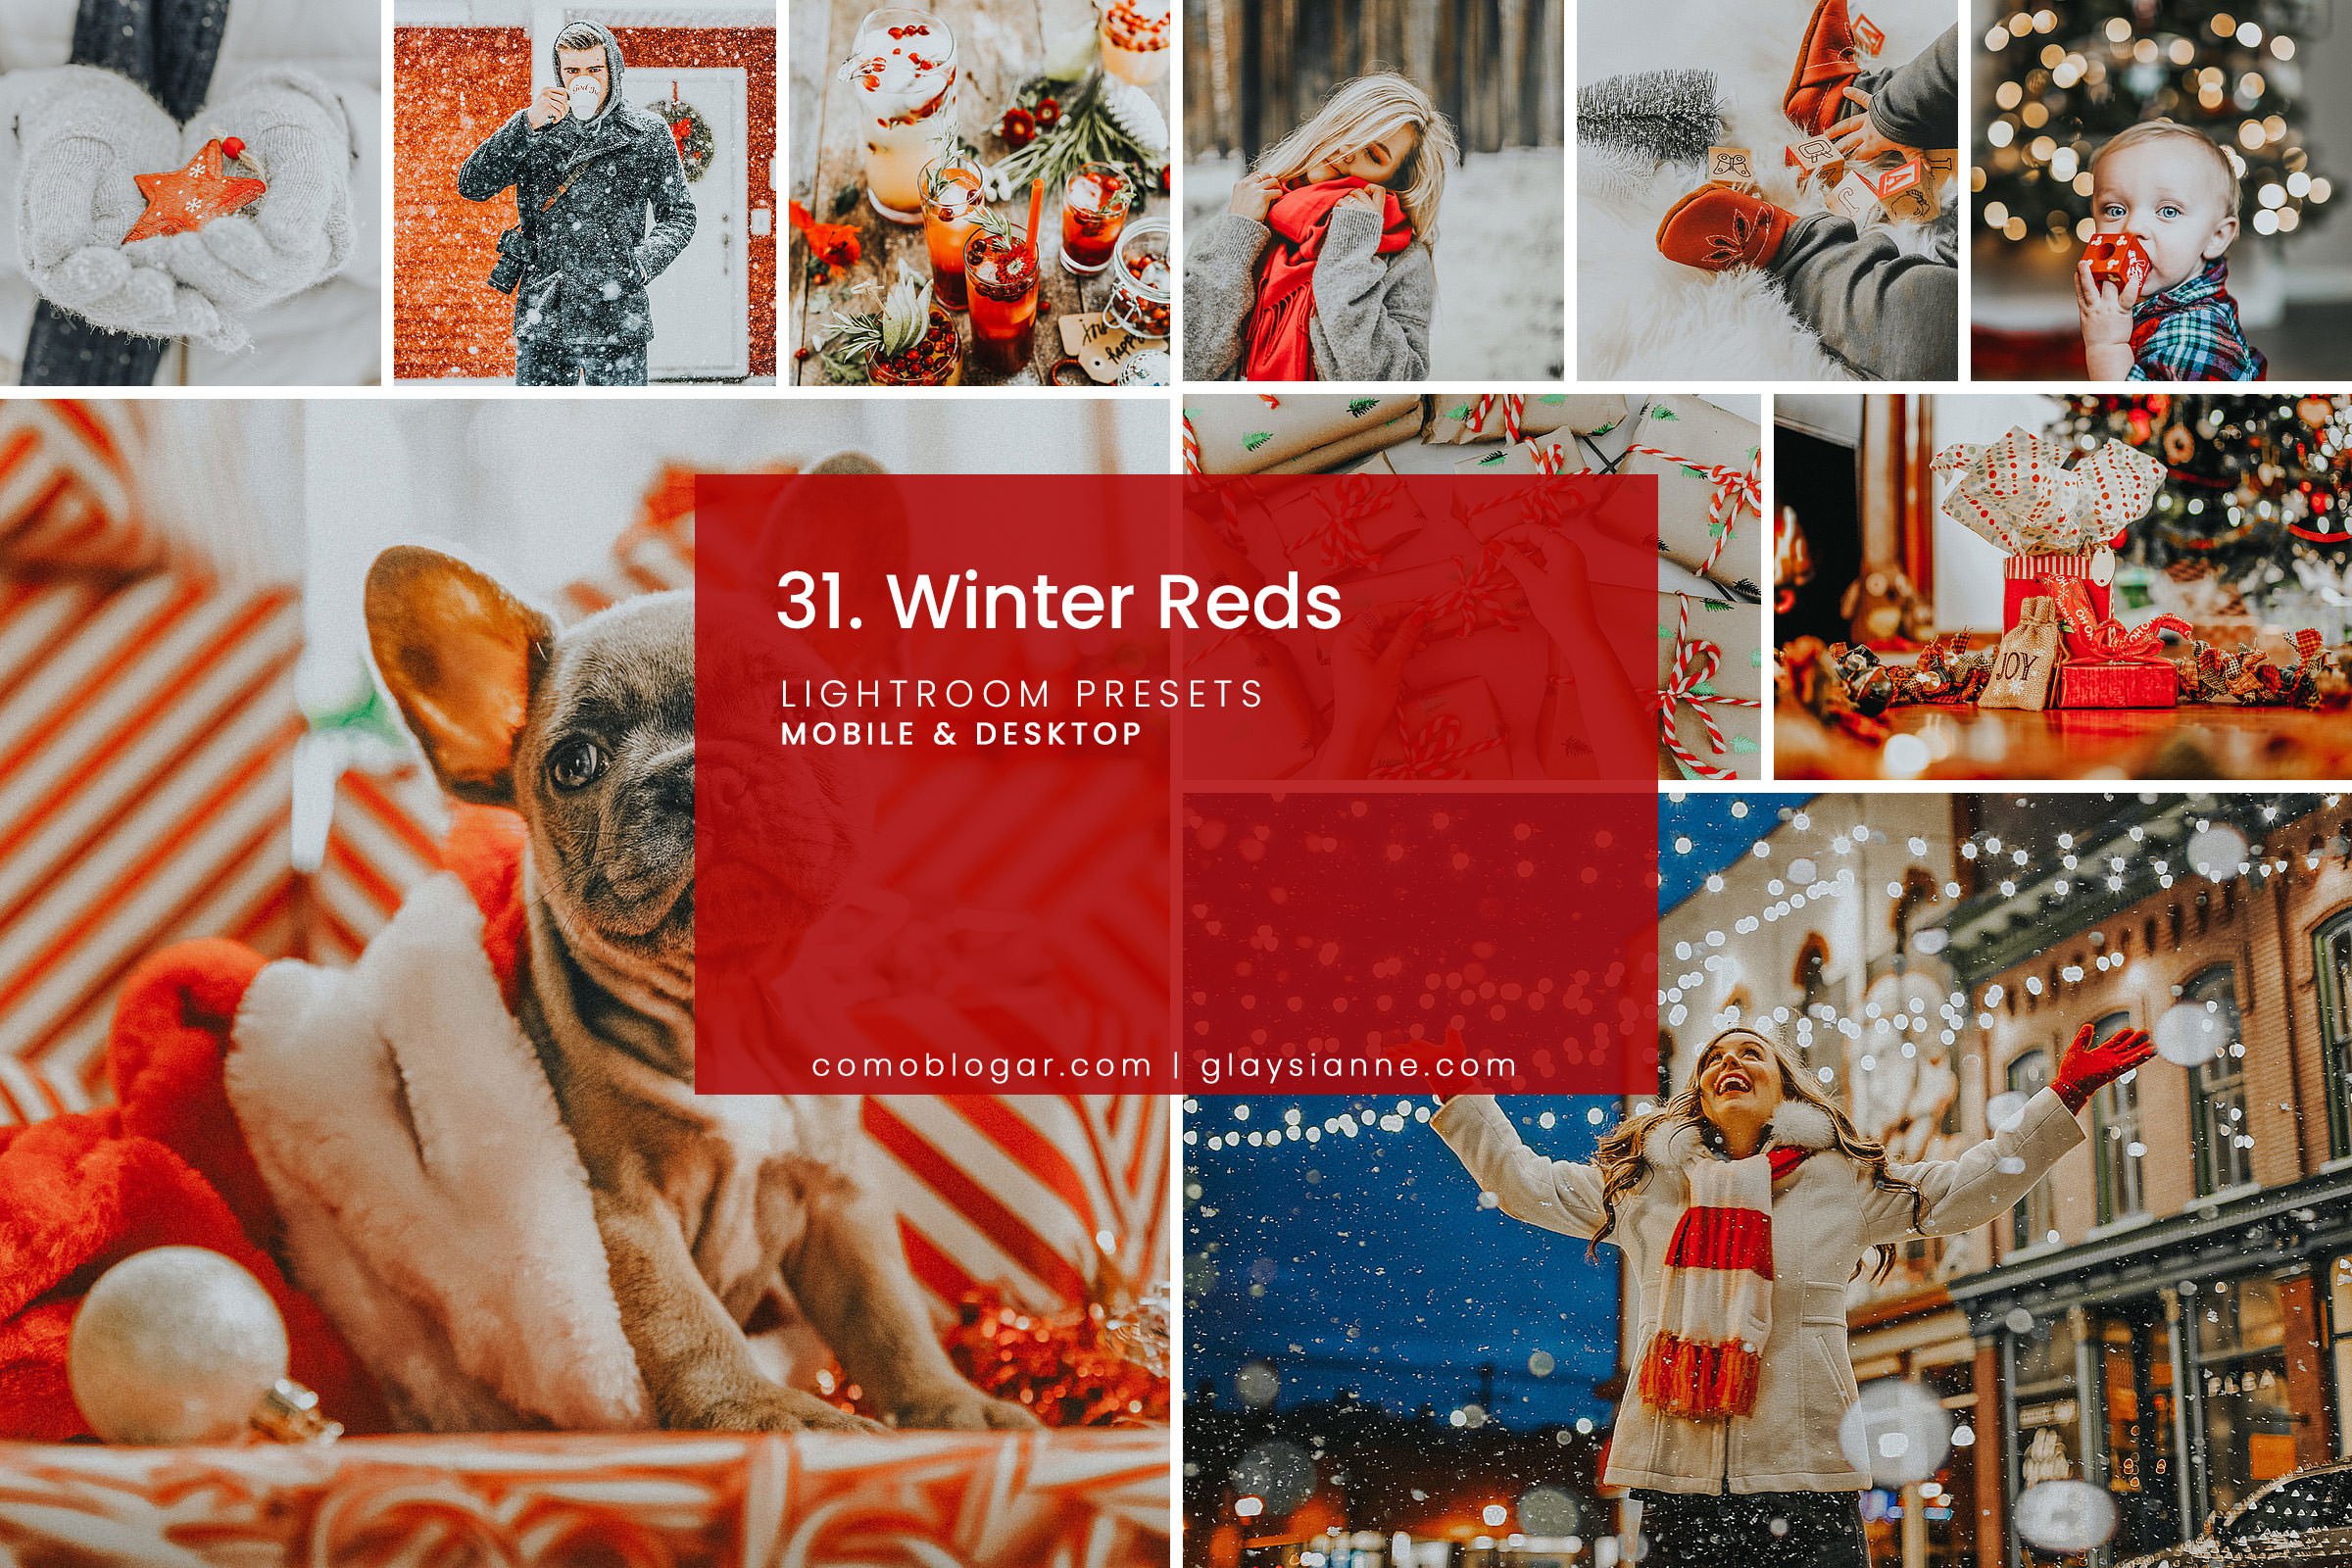 31. Winter Redscover image.